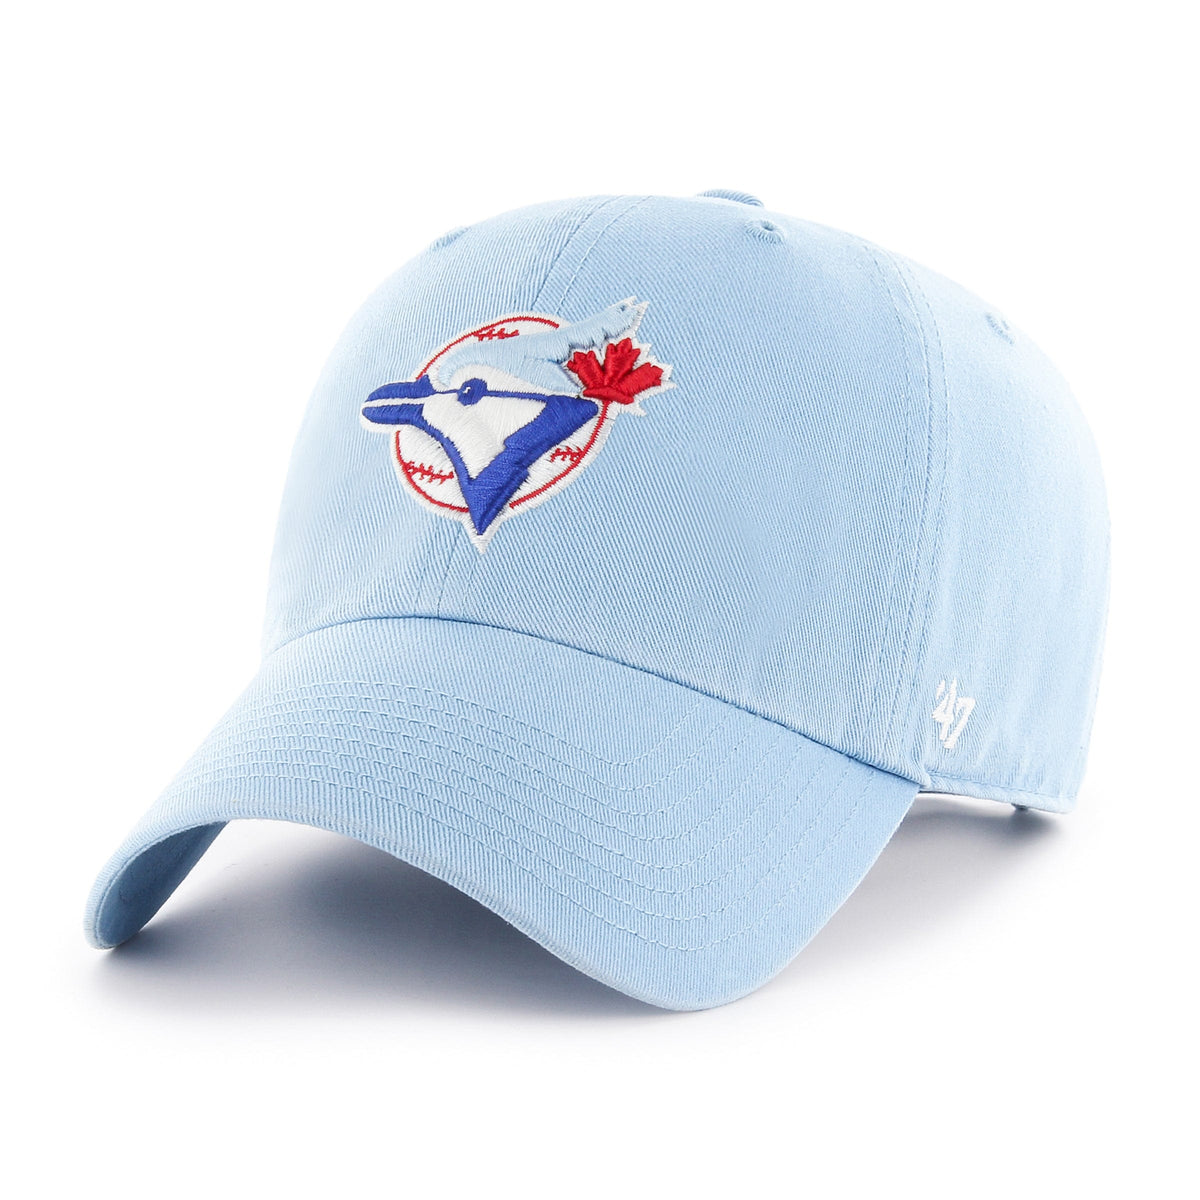 Toronto Blue Jays Heritage86 Cooperstown Men's Nike MLB Adjustable Hat.